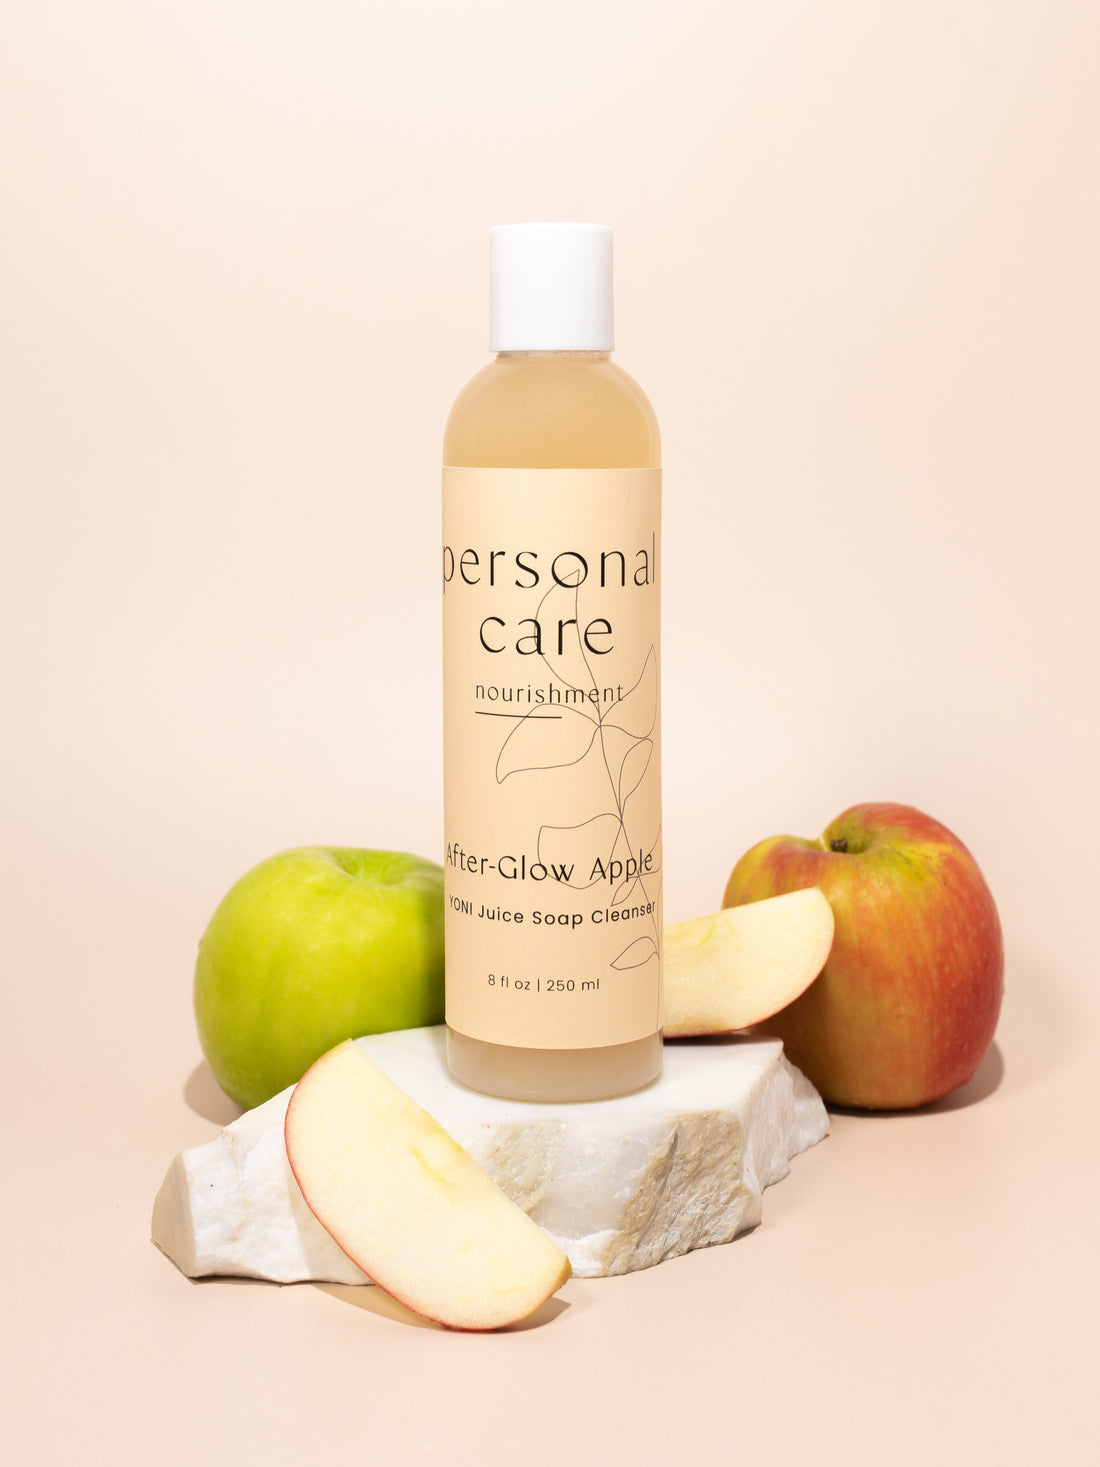 AfterGlow Apple - YONI Juice Soap Cleanser